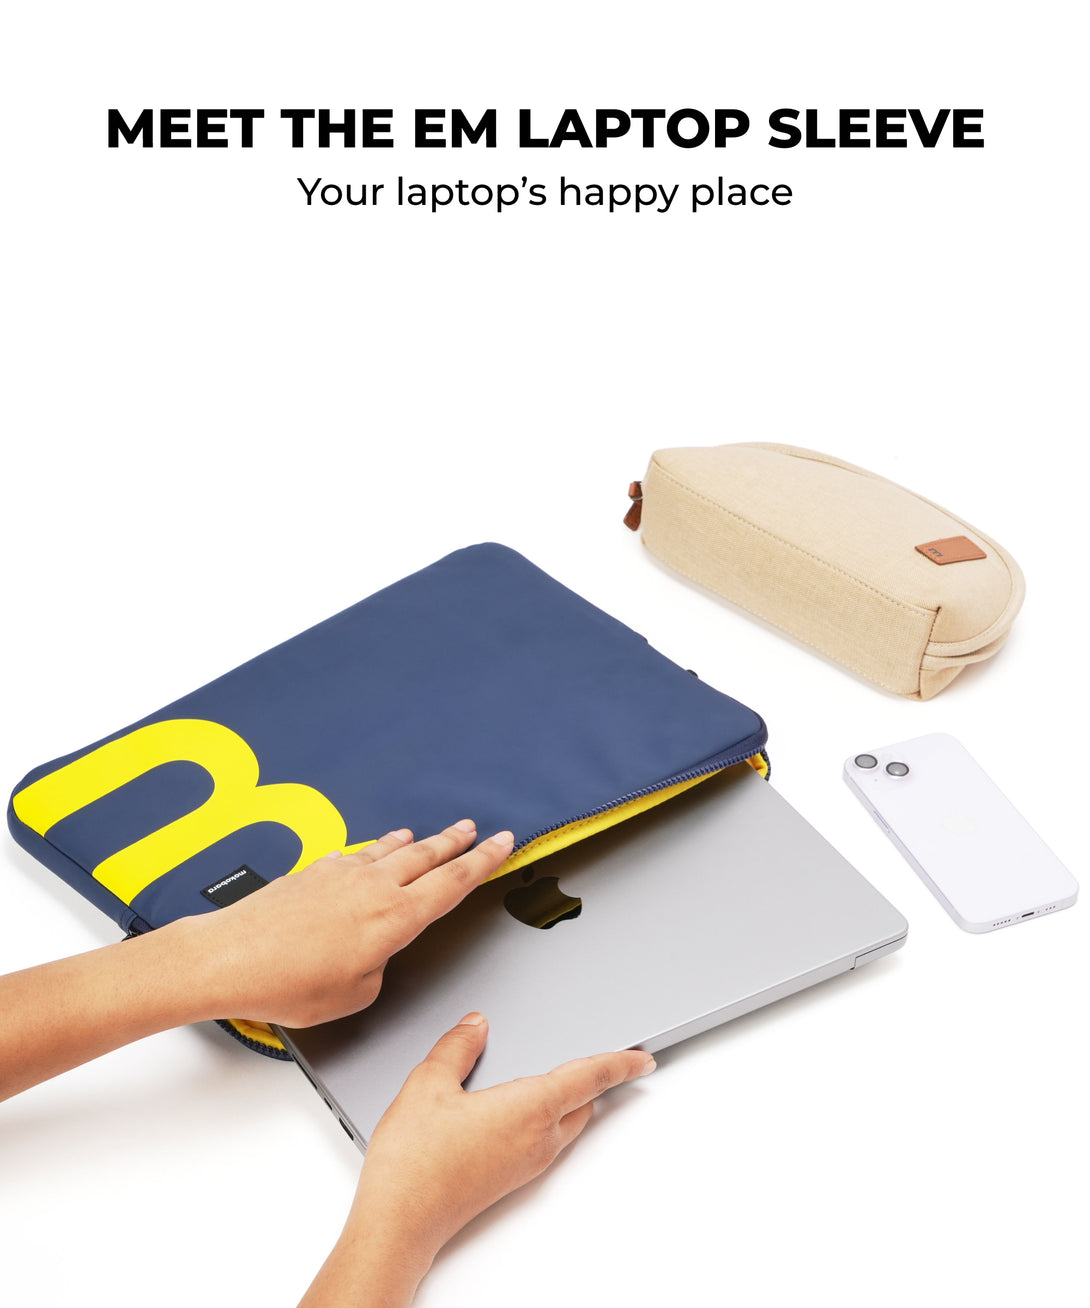 The Em Laptop Sleeve